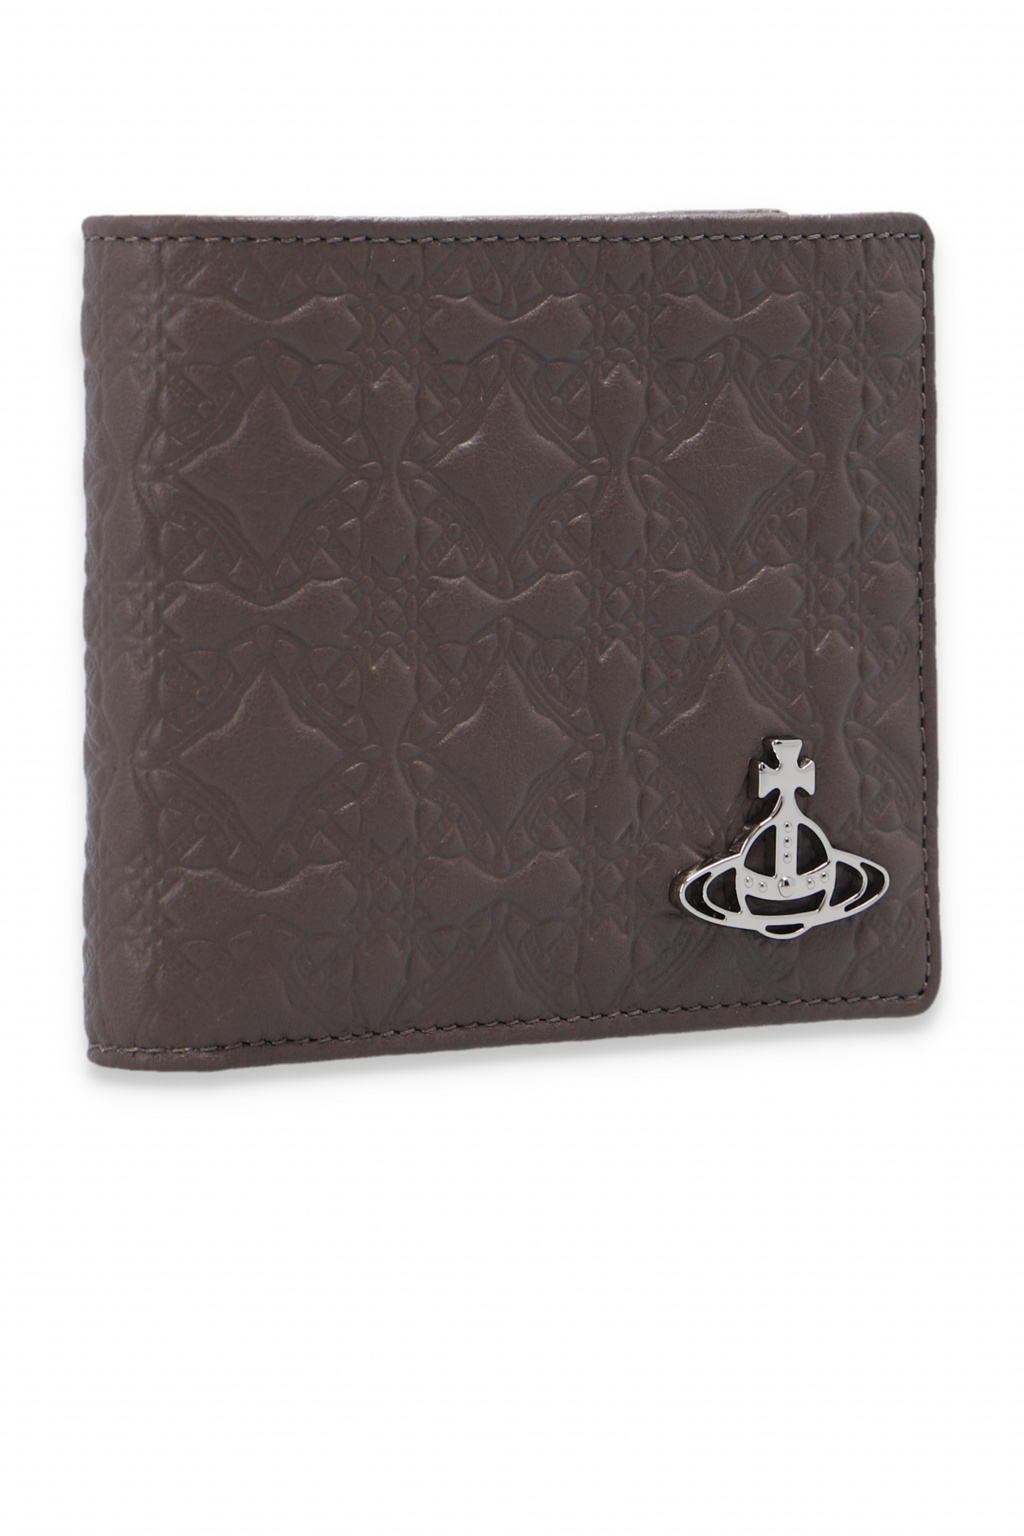 Vivienne Westwood ‘Geroge’ leather wallet with logo